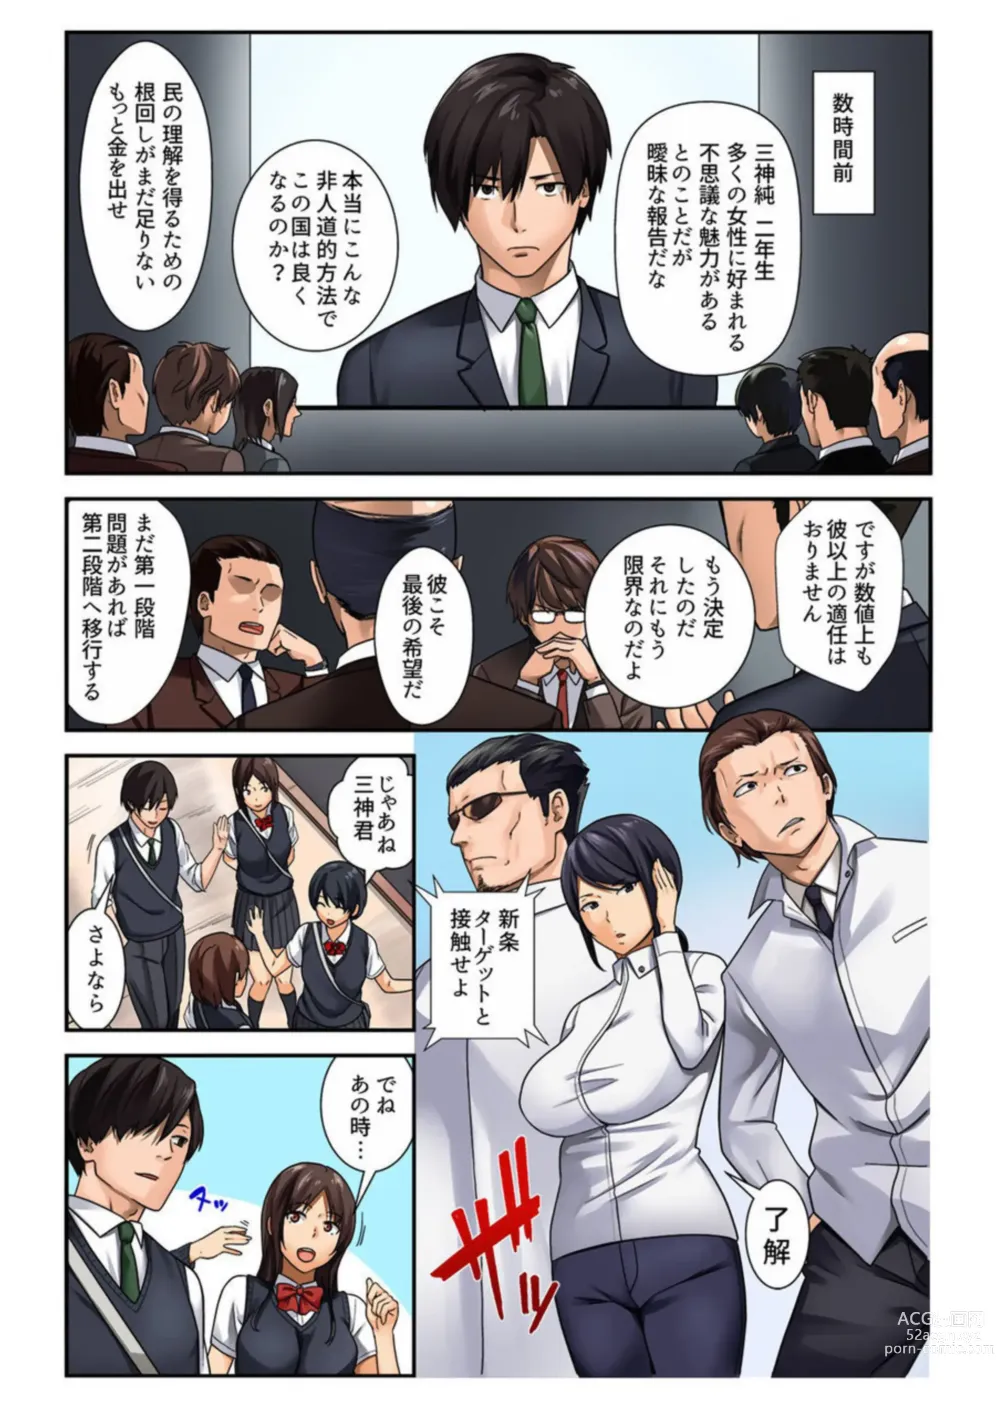 Page 4 of manga Kyousei Tanetsuke Project Itsu demo Doko demo Dare to demo 1